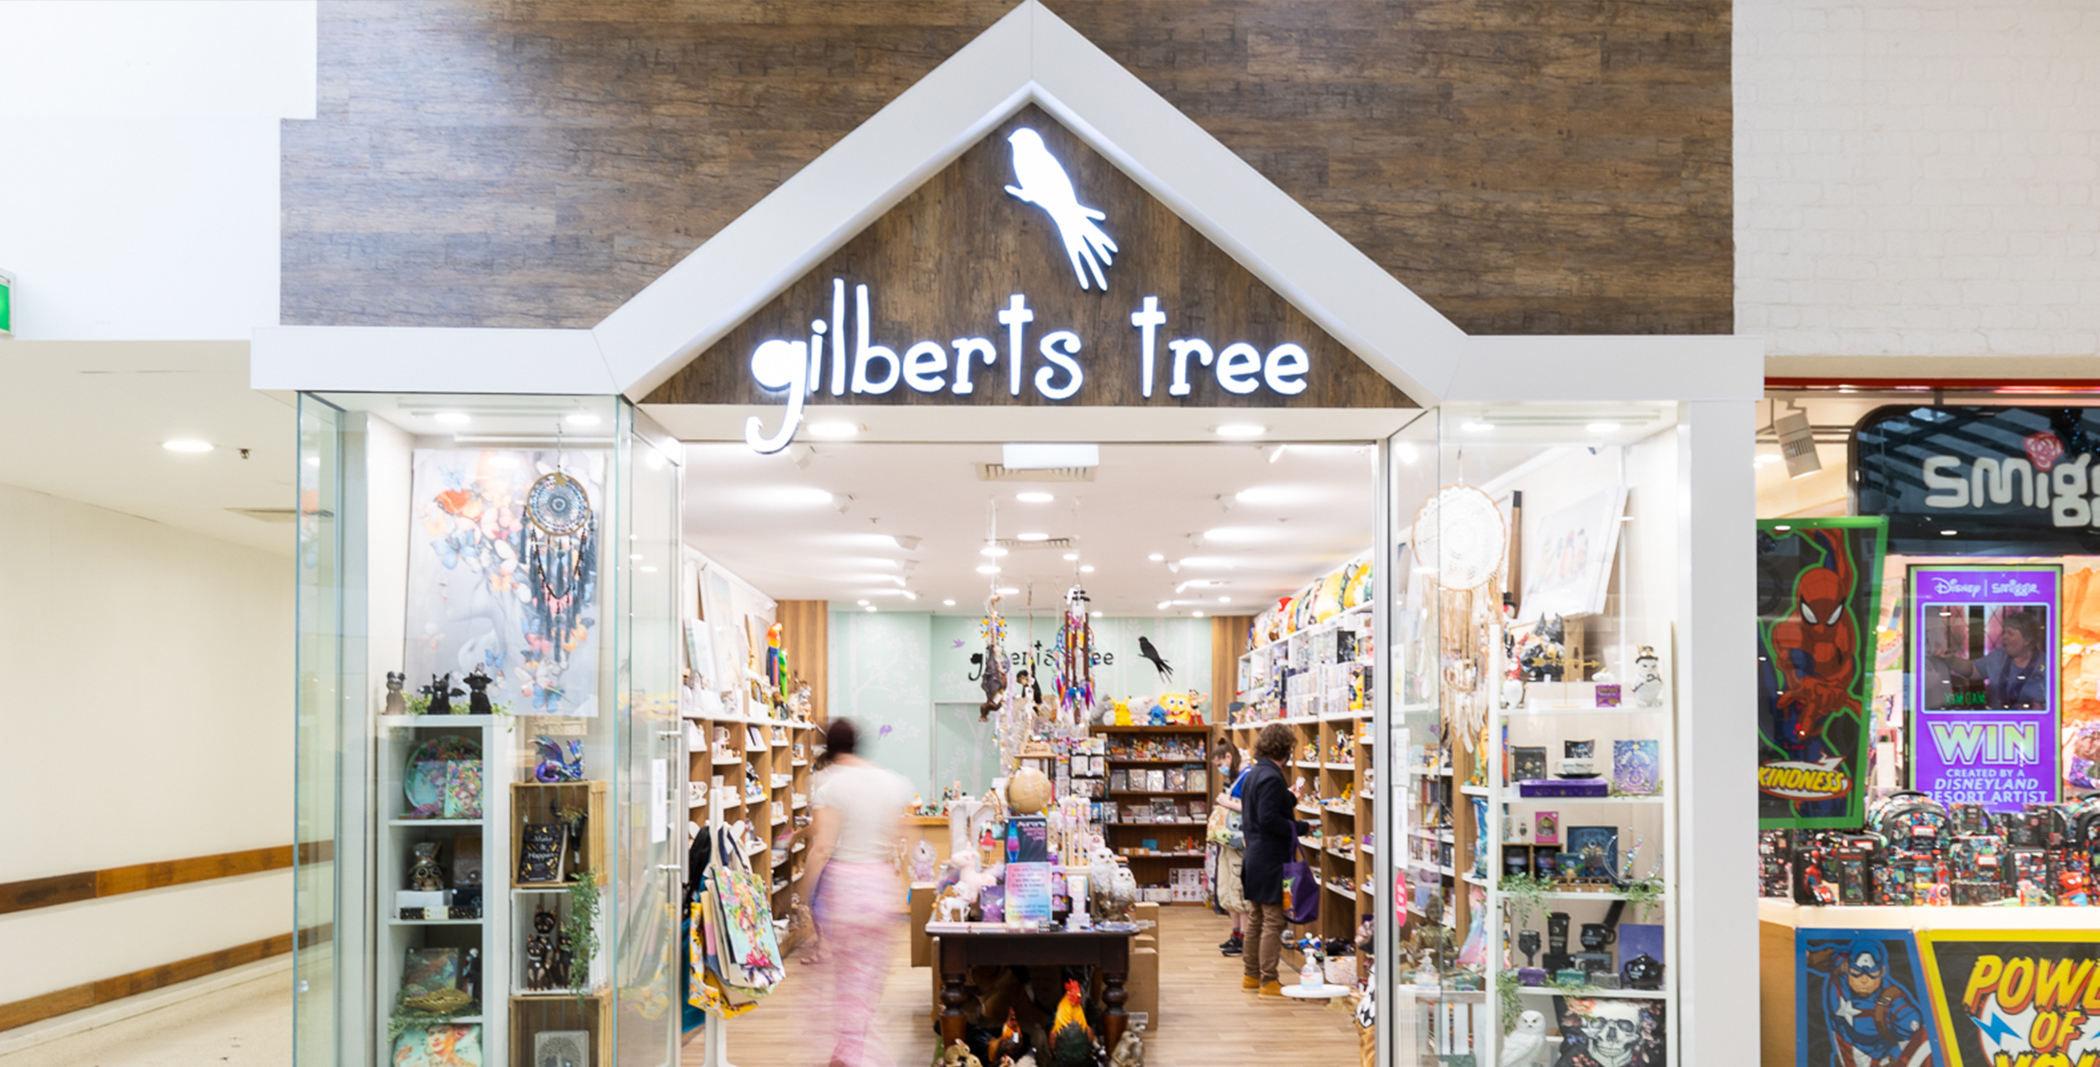 Gilberts Tree shop.jpg